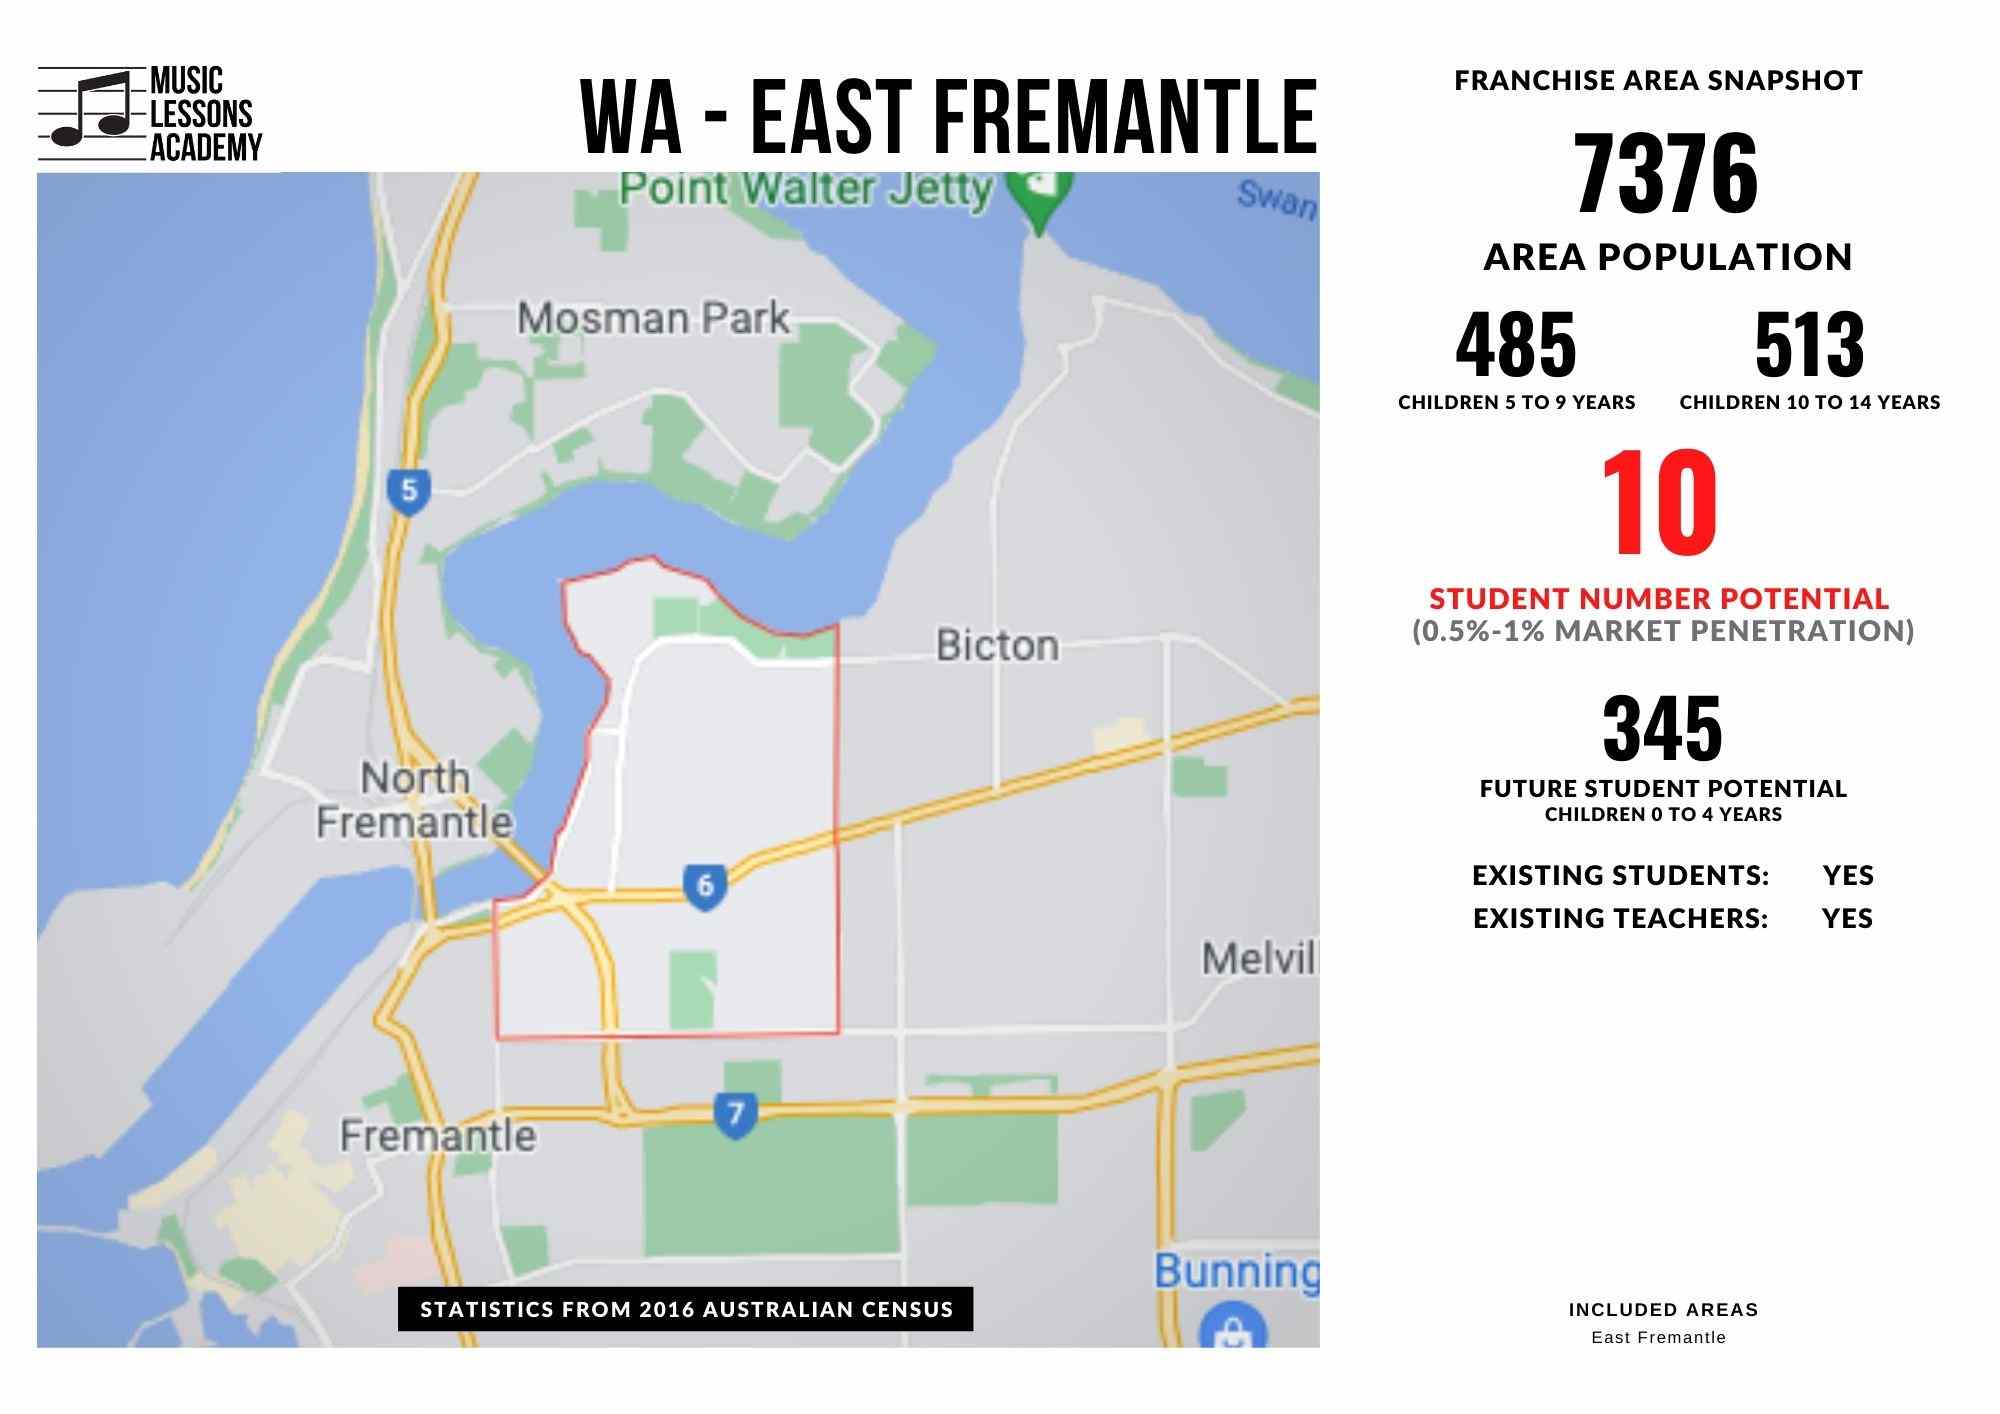 WA East Fremantle Franchise for sale